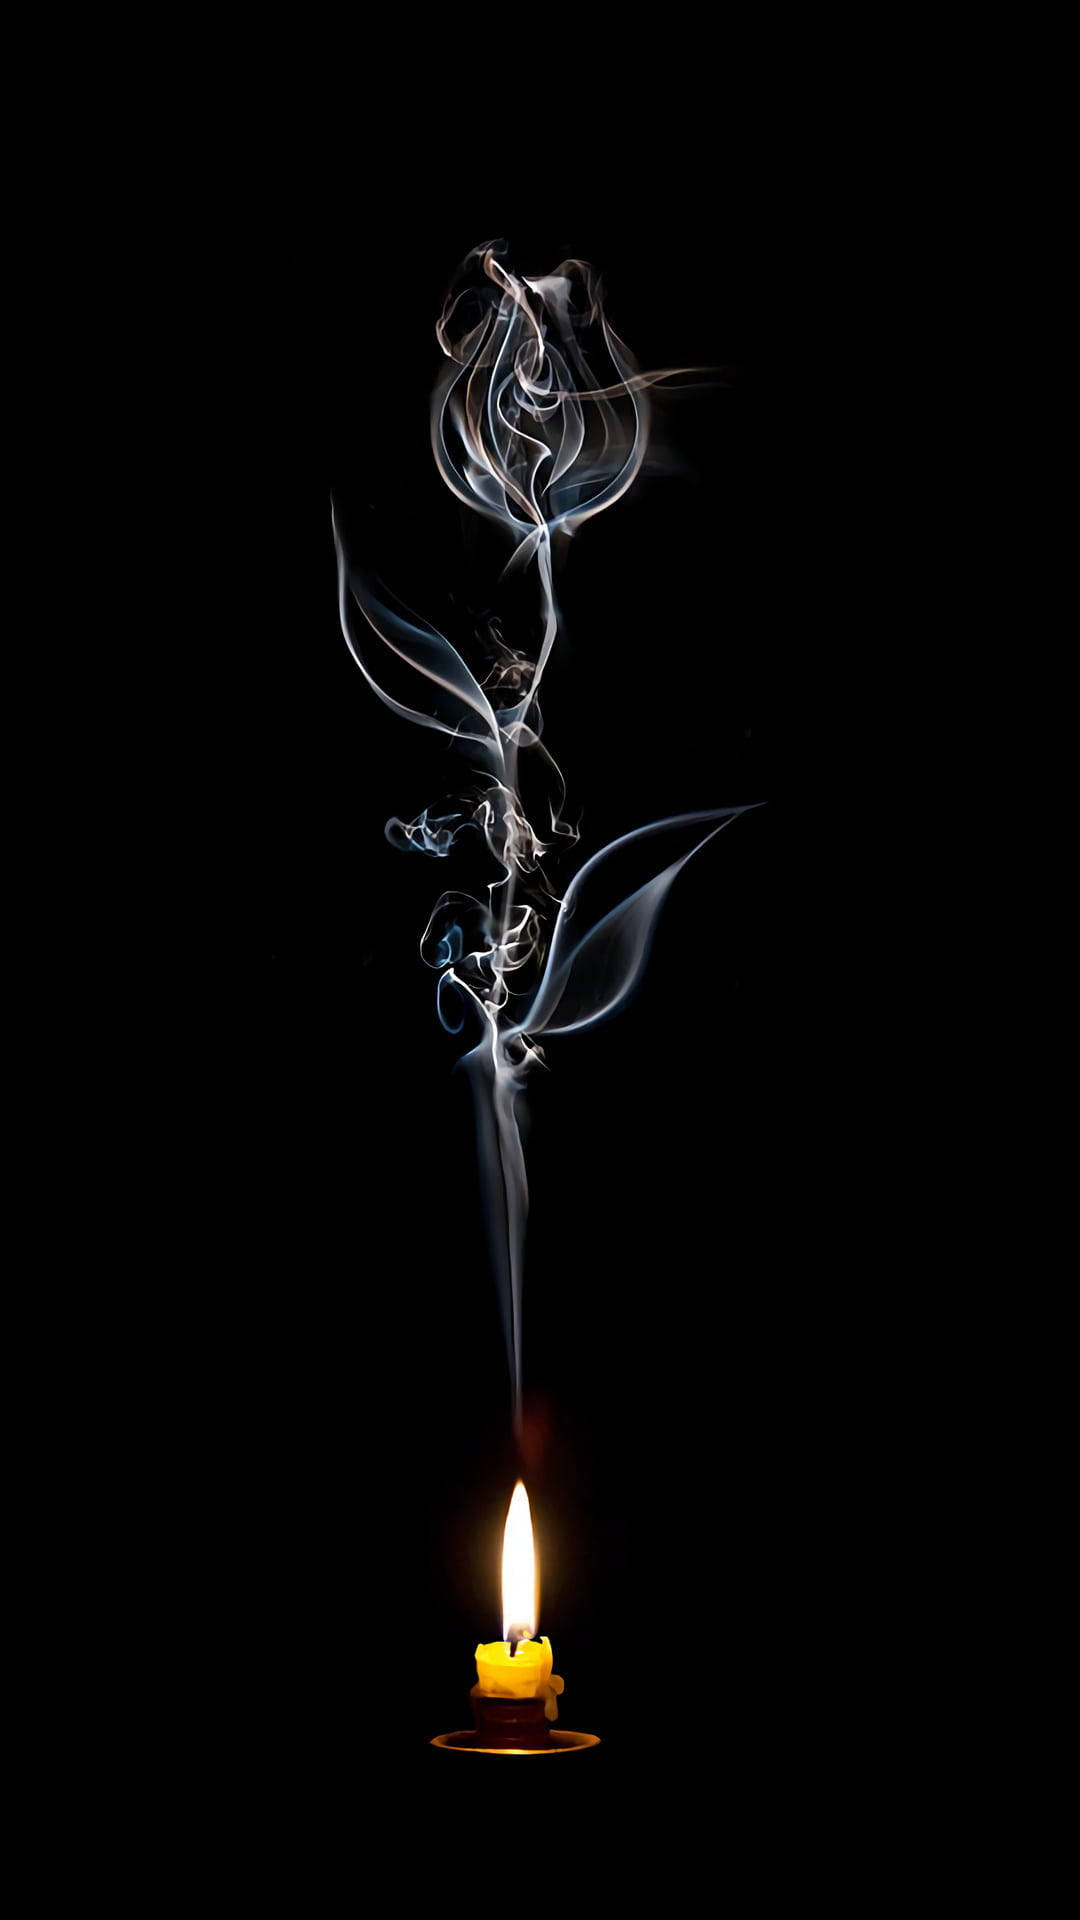 Smoke Rose Art Iphone Background